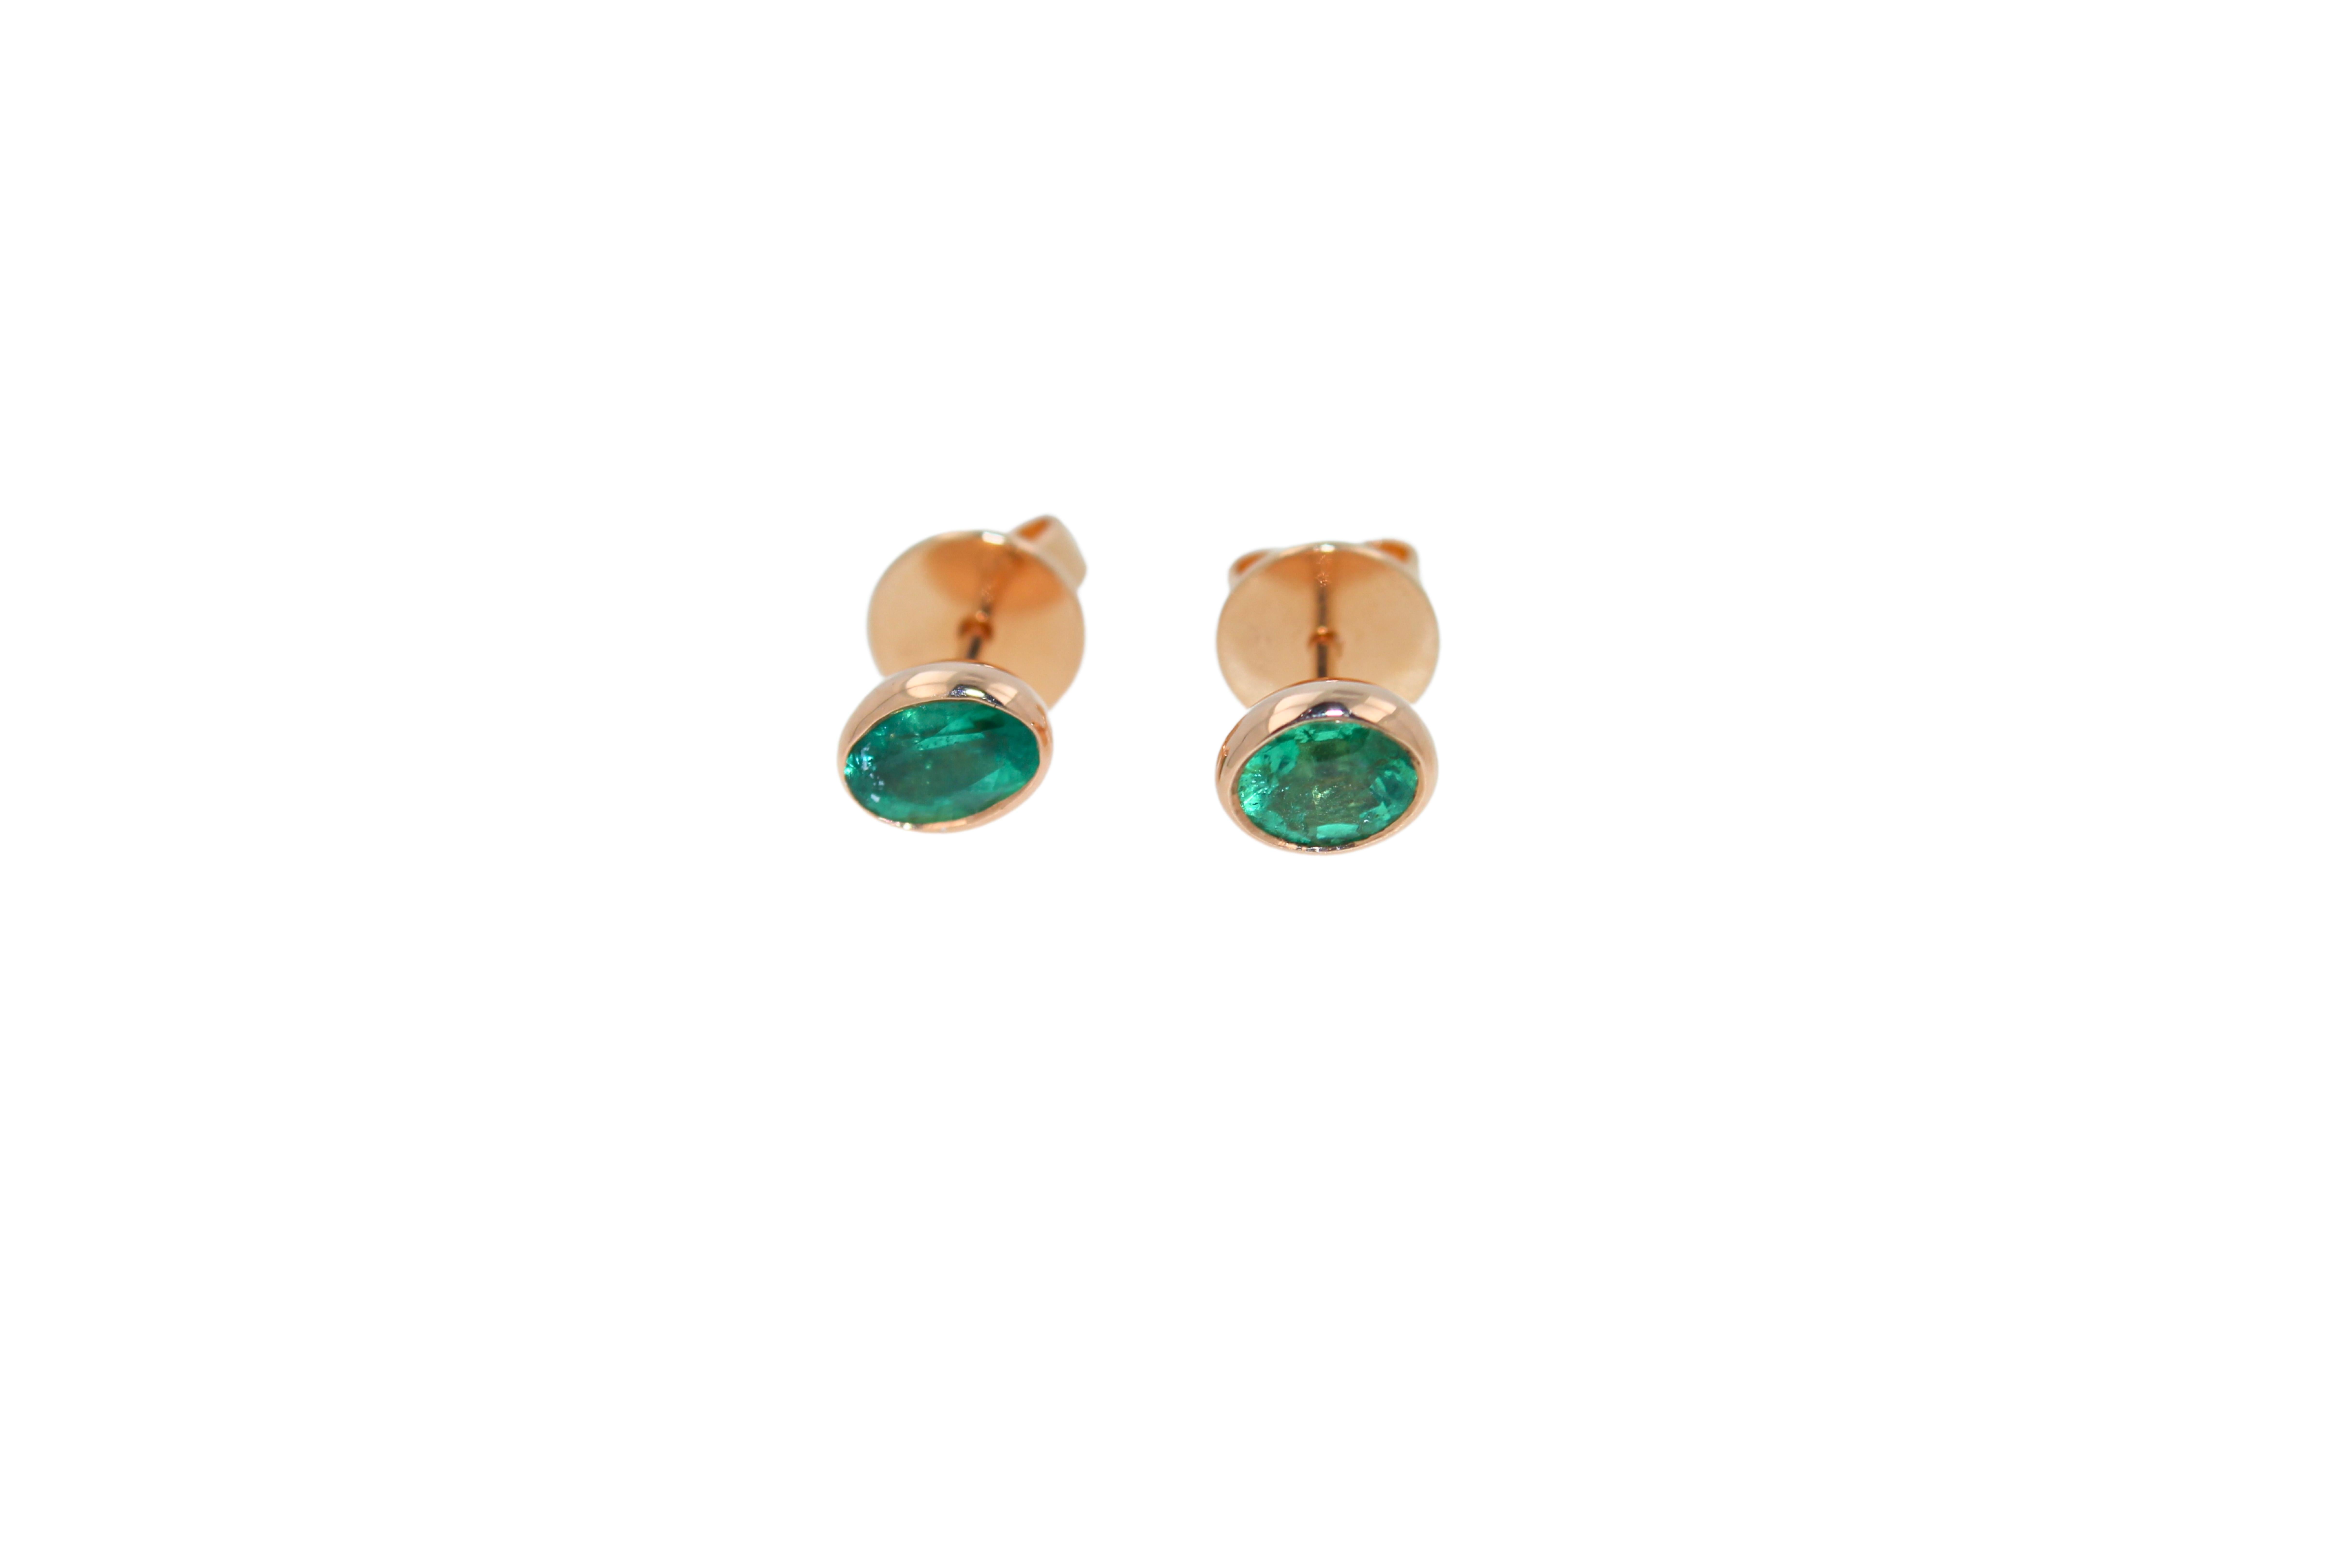 Emerald Bezel Earrings
Small Stud Earrings
Full Bezel Set
18k Rose Gold 
Oval-Shape 
Genuine Emeralds 
Beautiful, Medium Vivid Green Color 
Around 1.2 Carats Total Weight
High-Quality, Make, Polished Finish